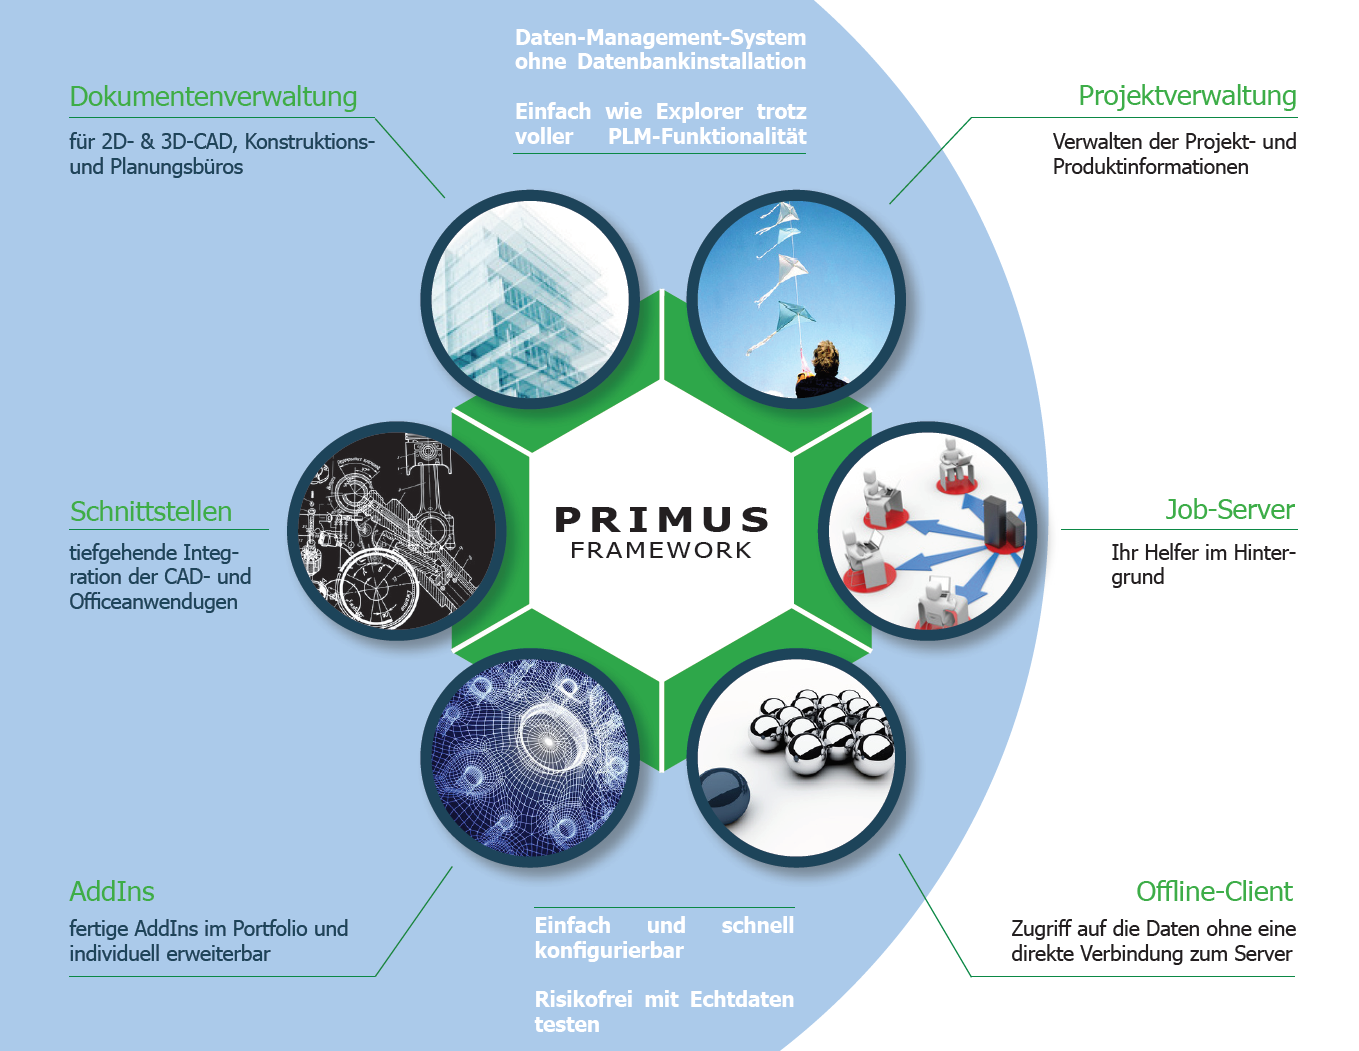 Primus PLM Framework